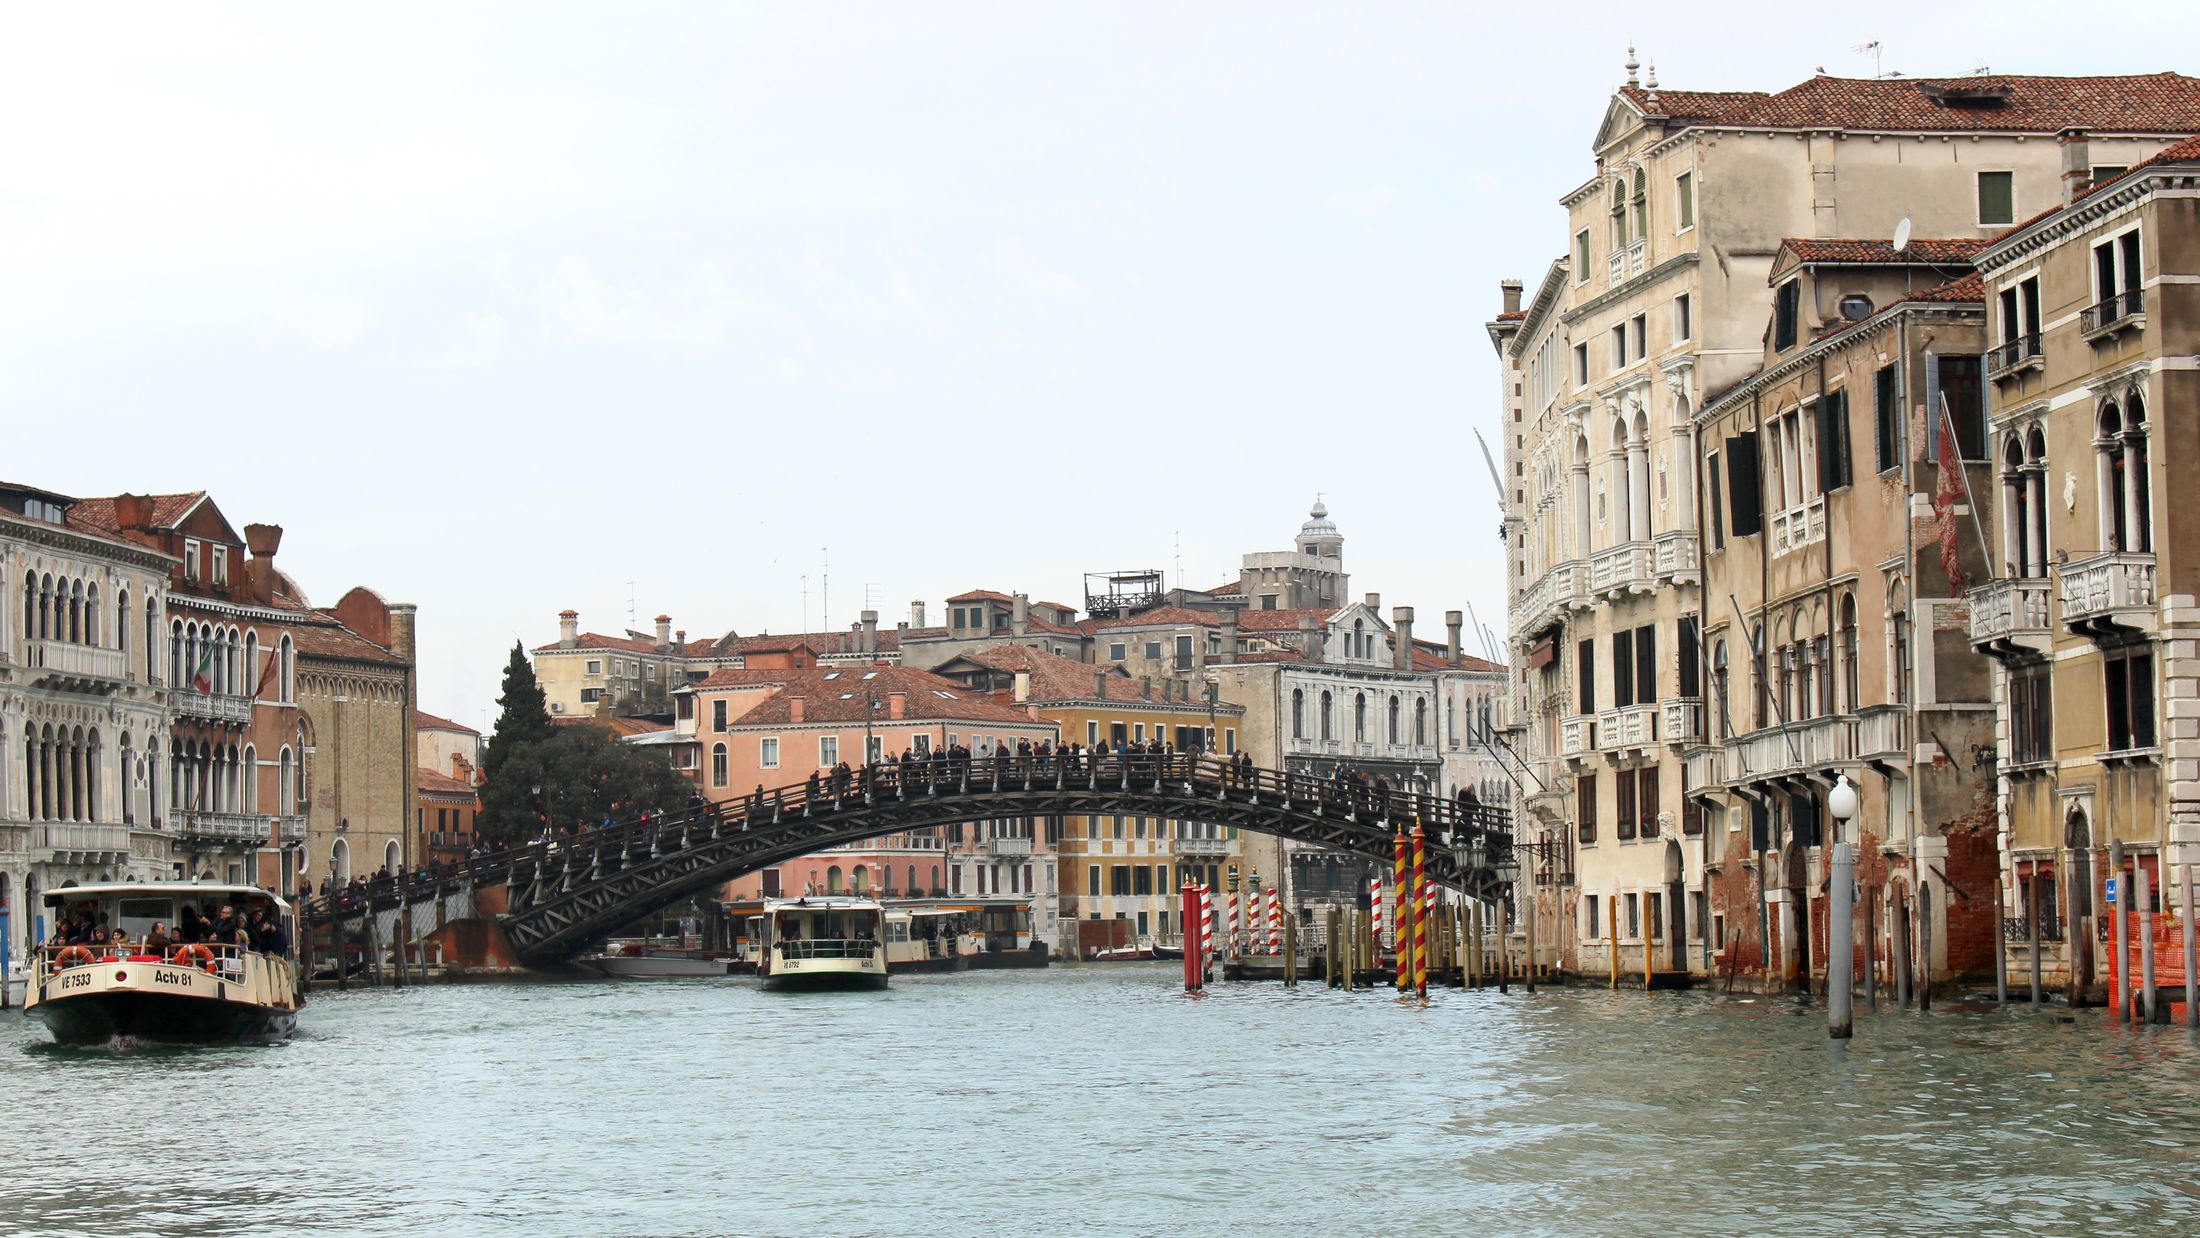 001109_Accademia Bridge on the Grand Canal_Venice_Italy_Emma Wilkinson_no model release_001-Hybris